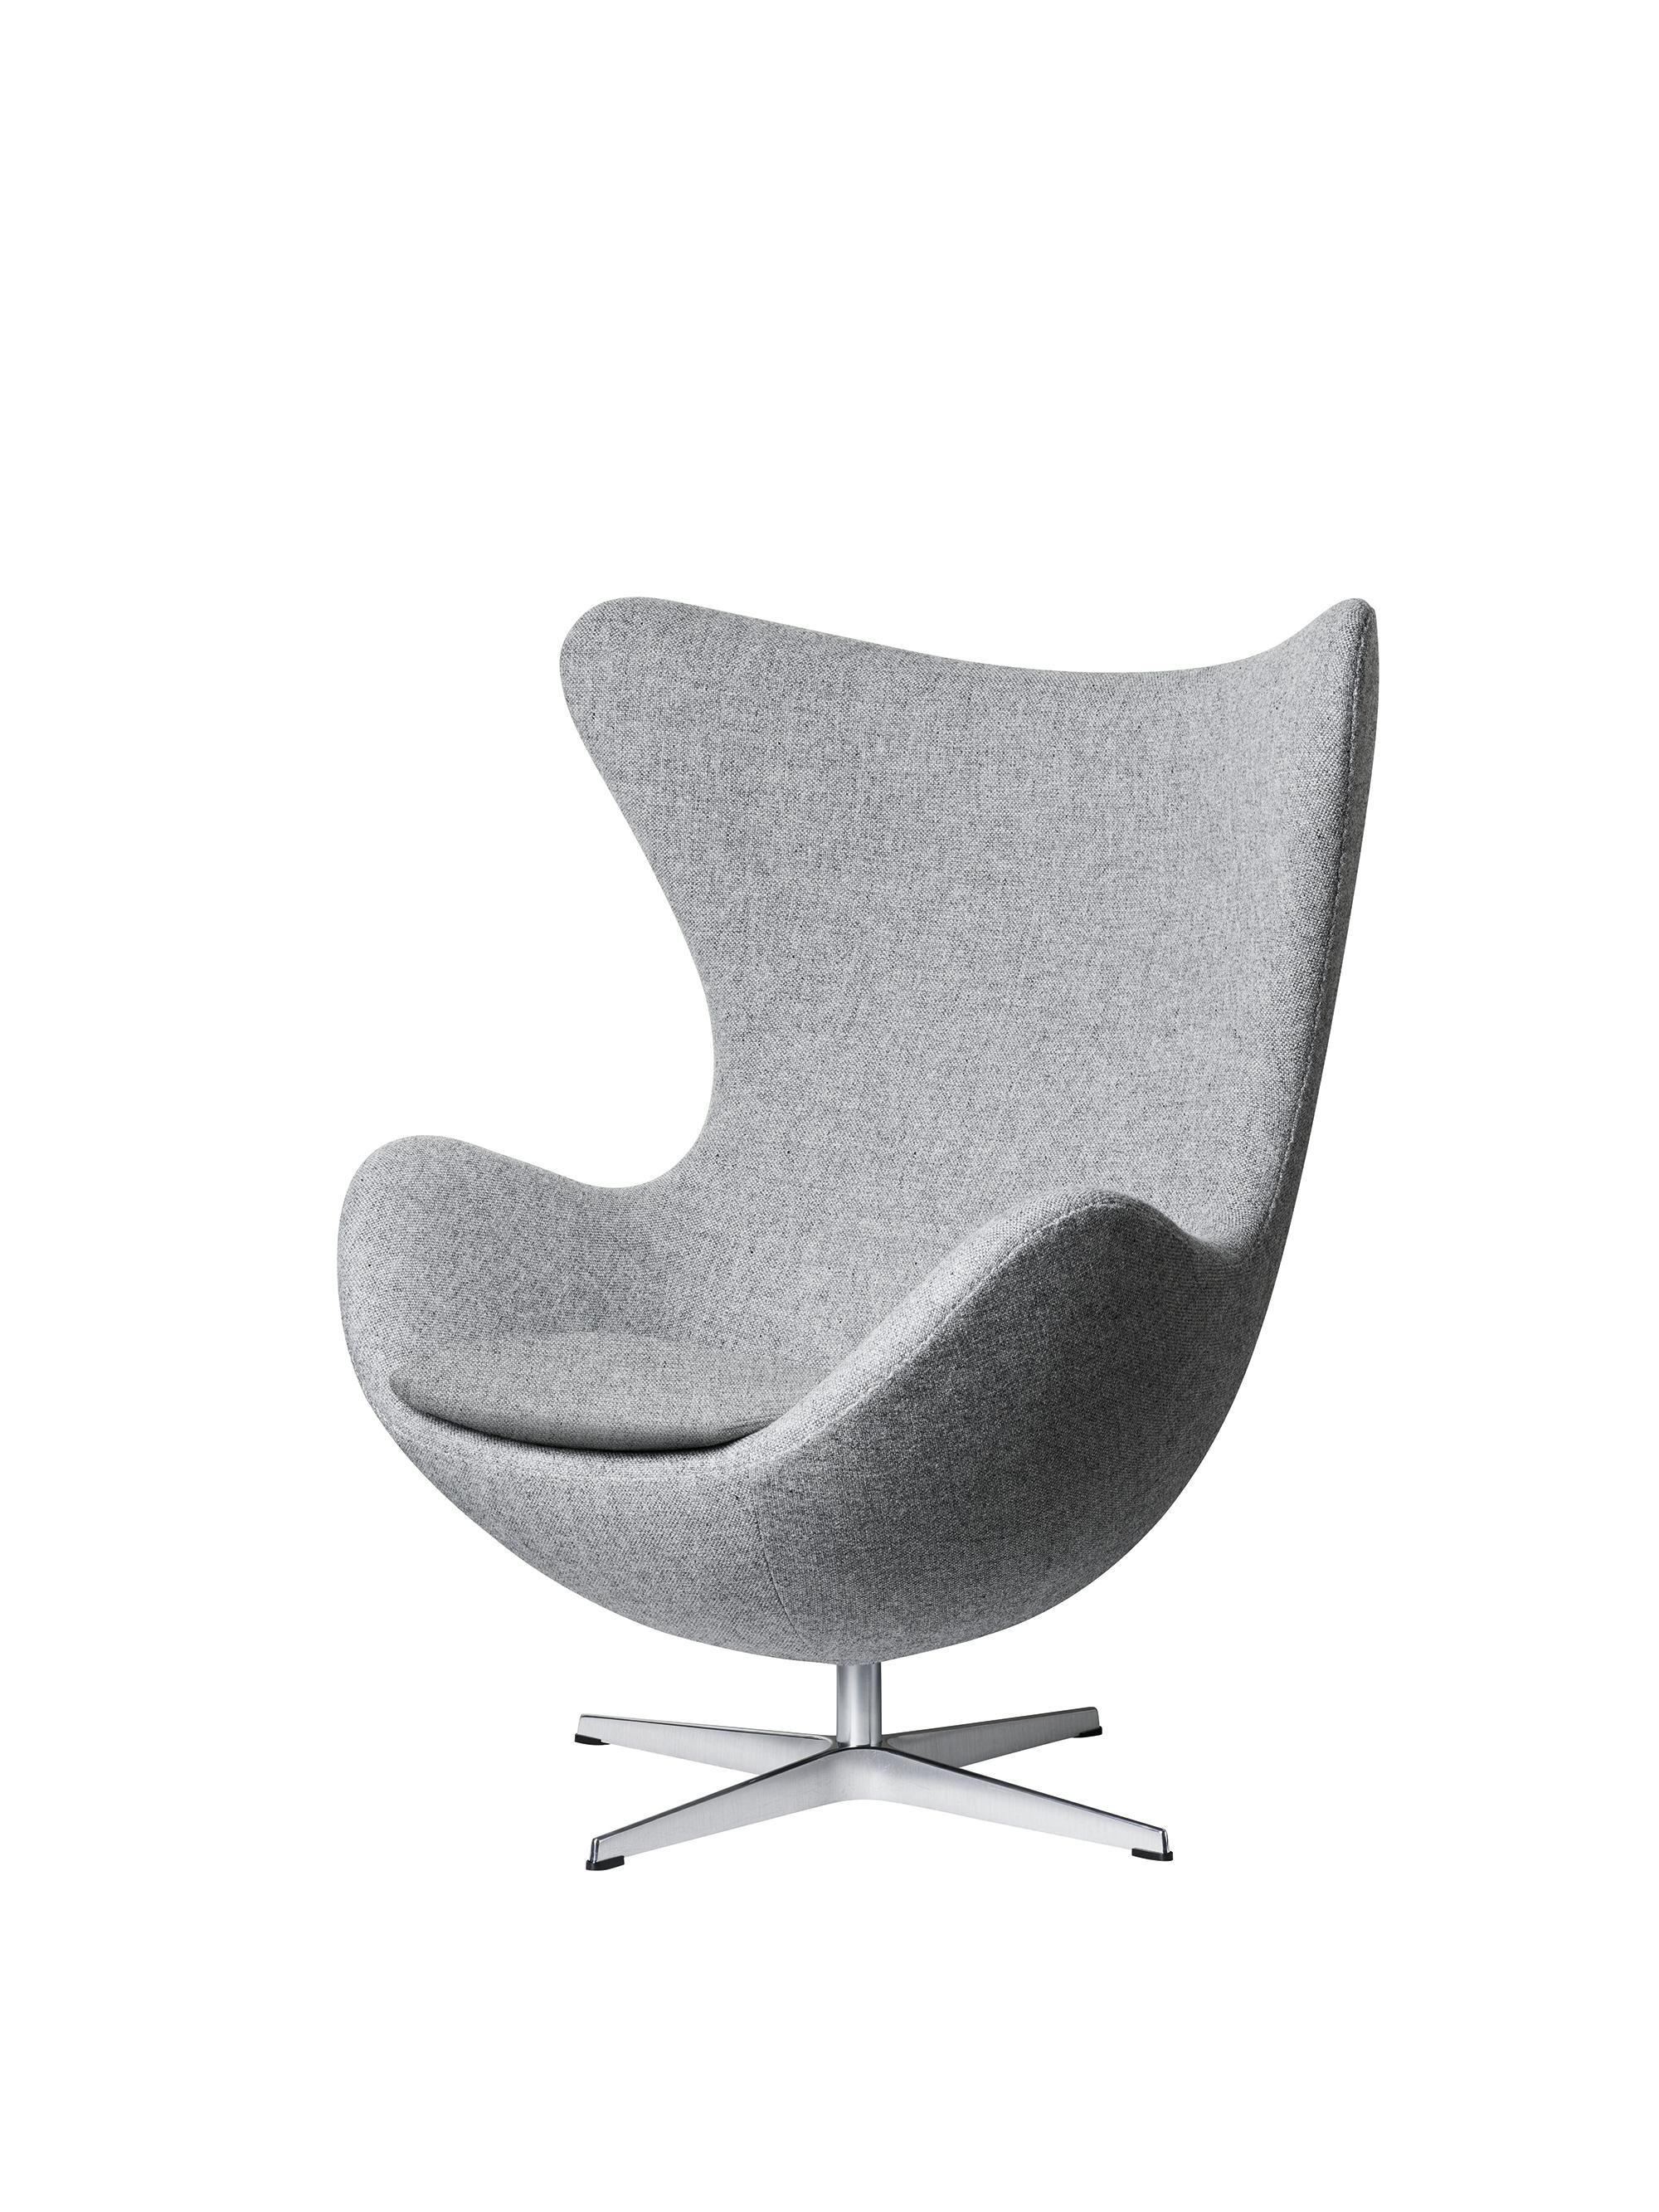 Contemporary Arne Jacobsen 'Egg' Chair for Fritz Hansen in Fabric Upholstery (Cat. 2) For Sale